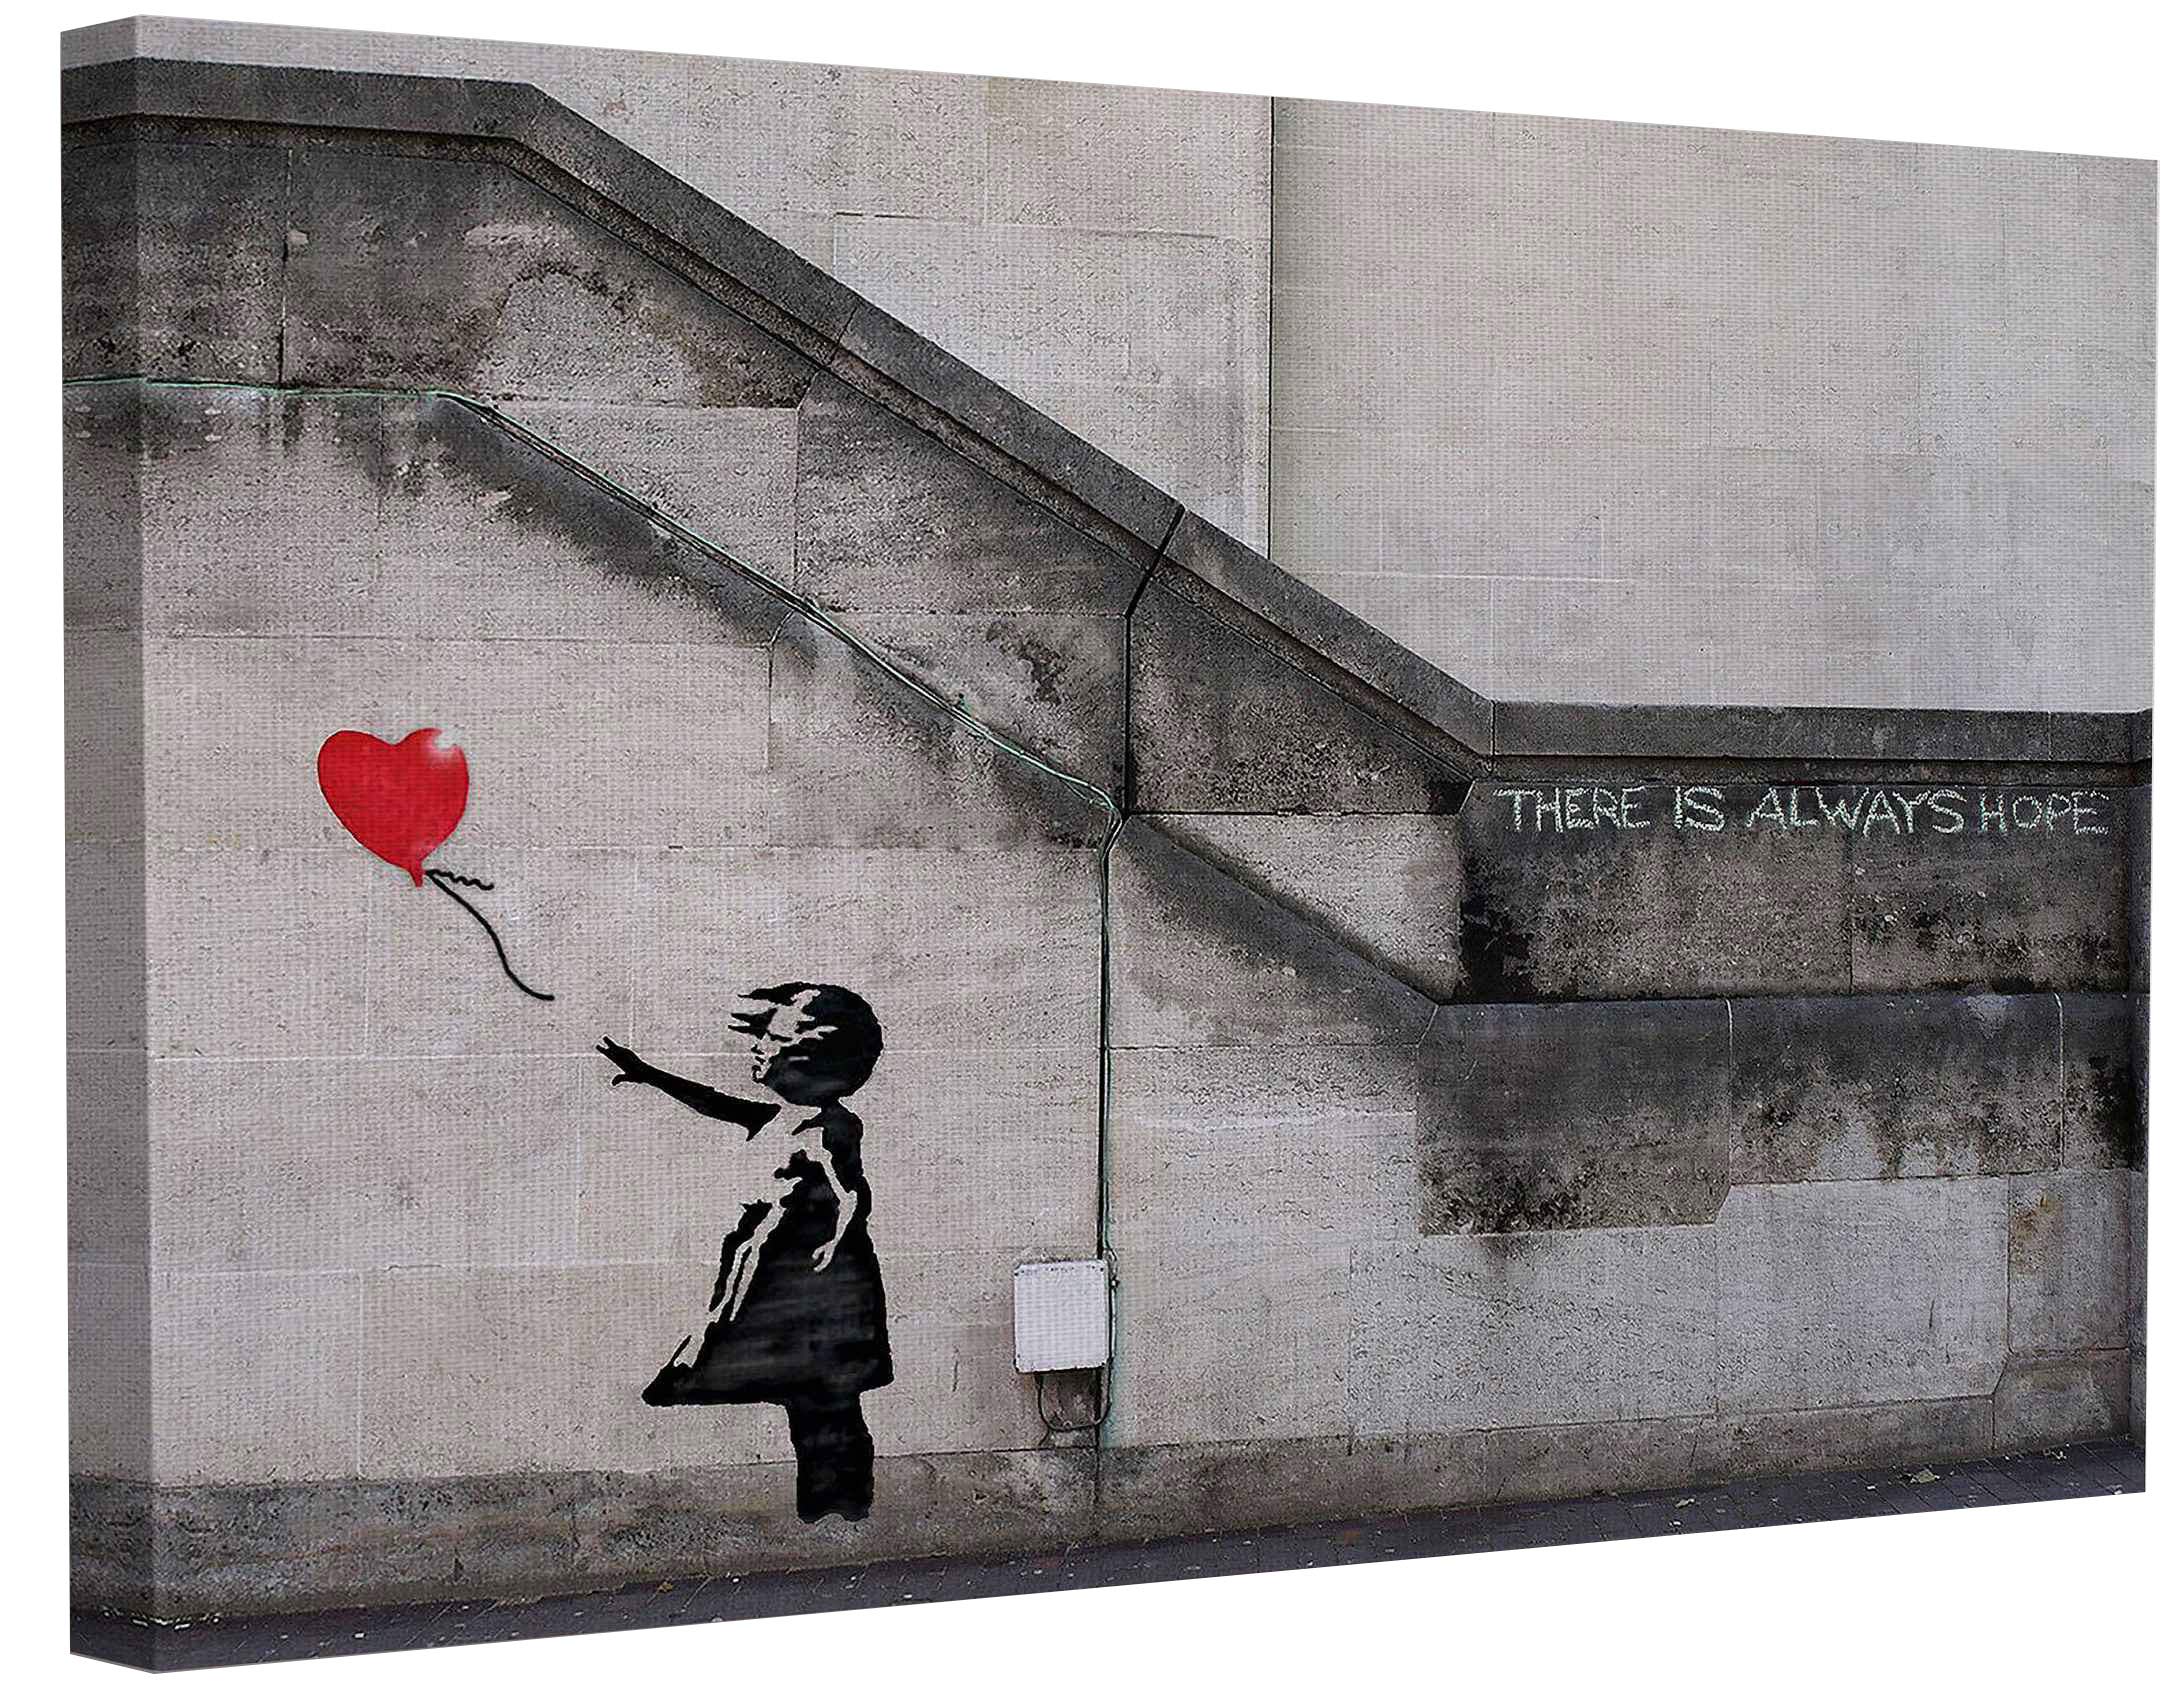 MJEDC Banksy Bilder Leinwand There is Always Hope Graffiti Street Art Leinwandbild Fertig Auf Keilrahmen Kunstdrucke Wohnzimmer Wanddekoration Deko XXL (80x120cm(31.5x47.2inch))